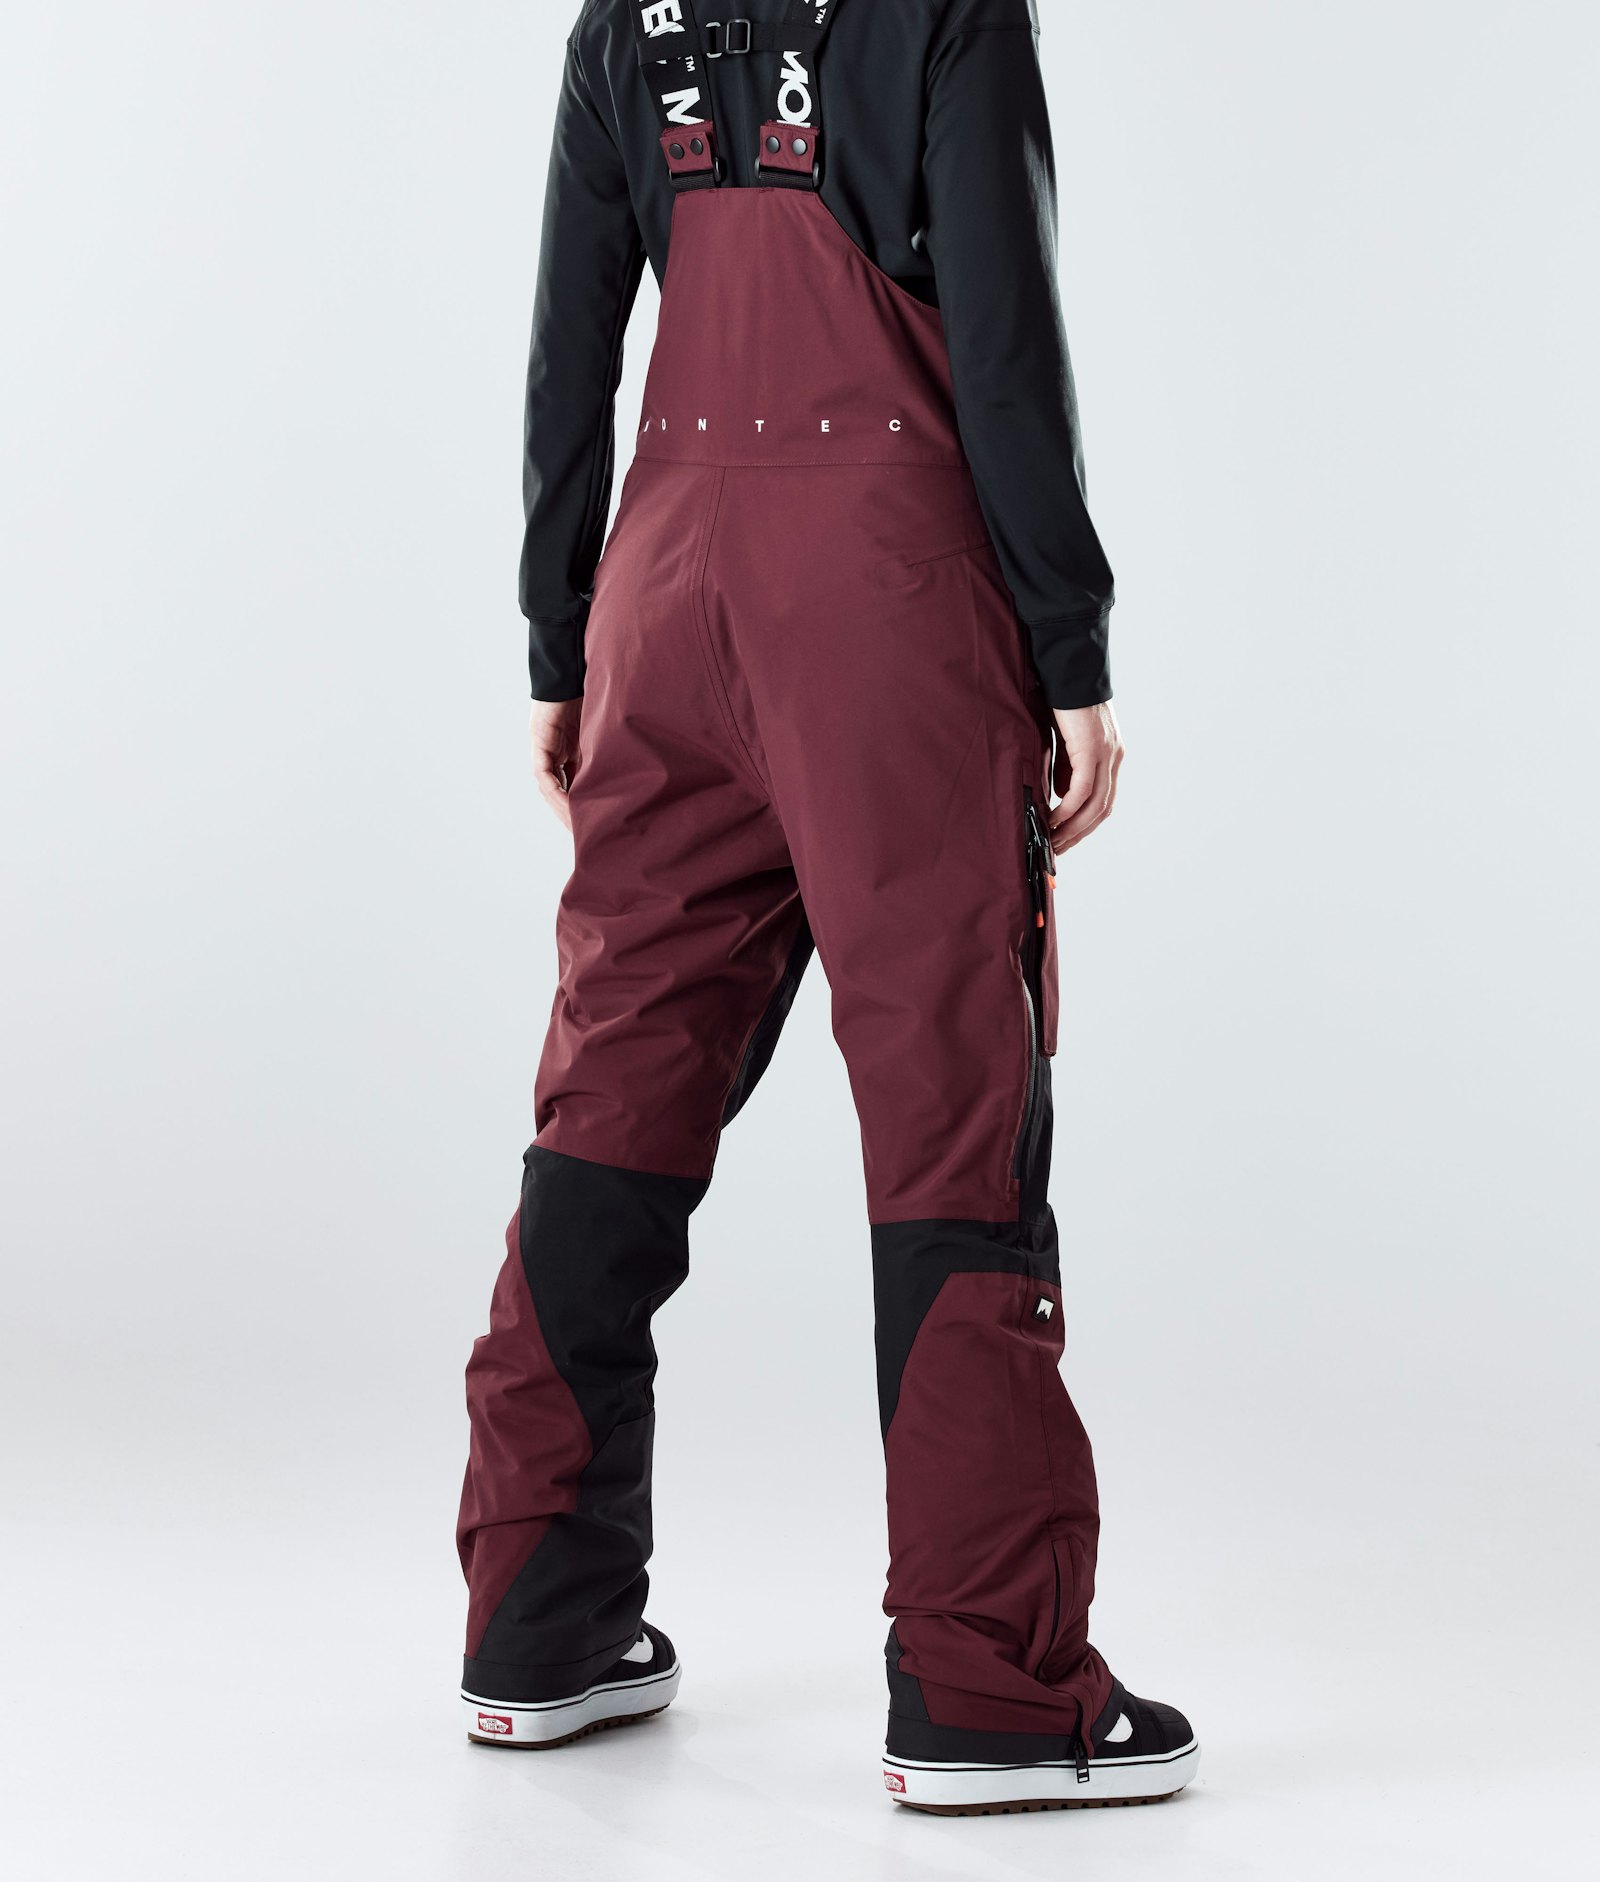 Fawk W 2020 Snowboard Pants Women Burgundy/Black